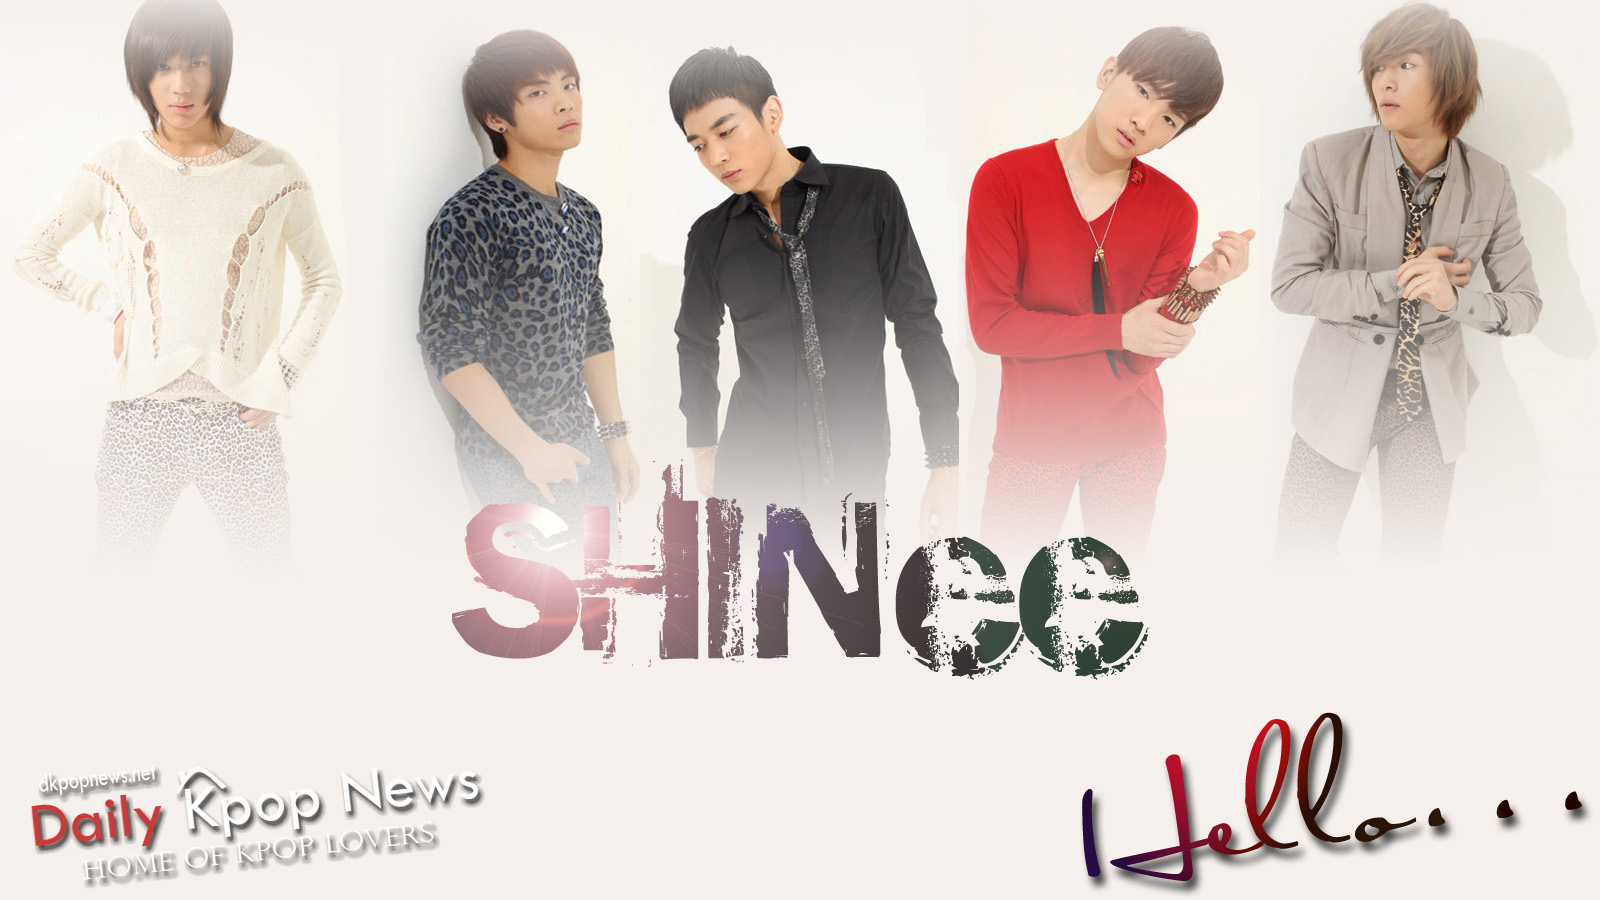 Download SHINee's Hello wallpaper. Daily K Pop News